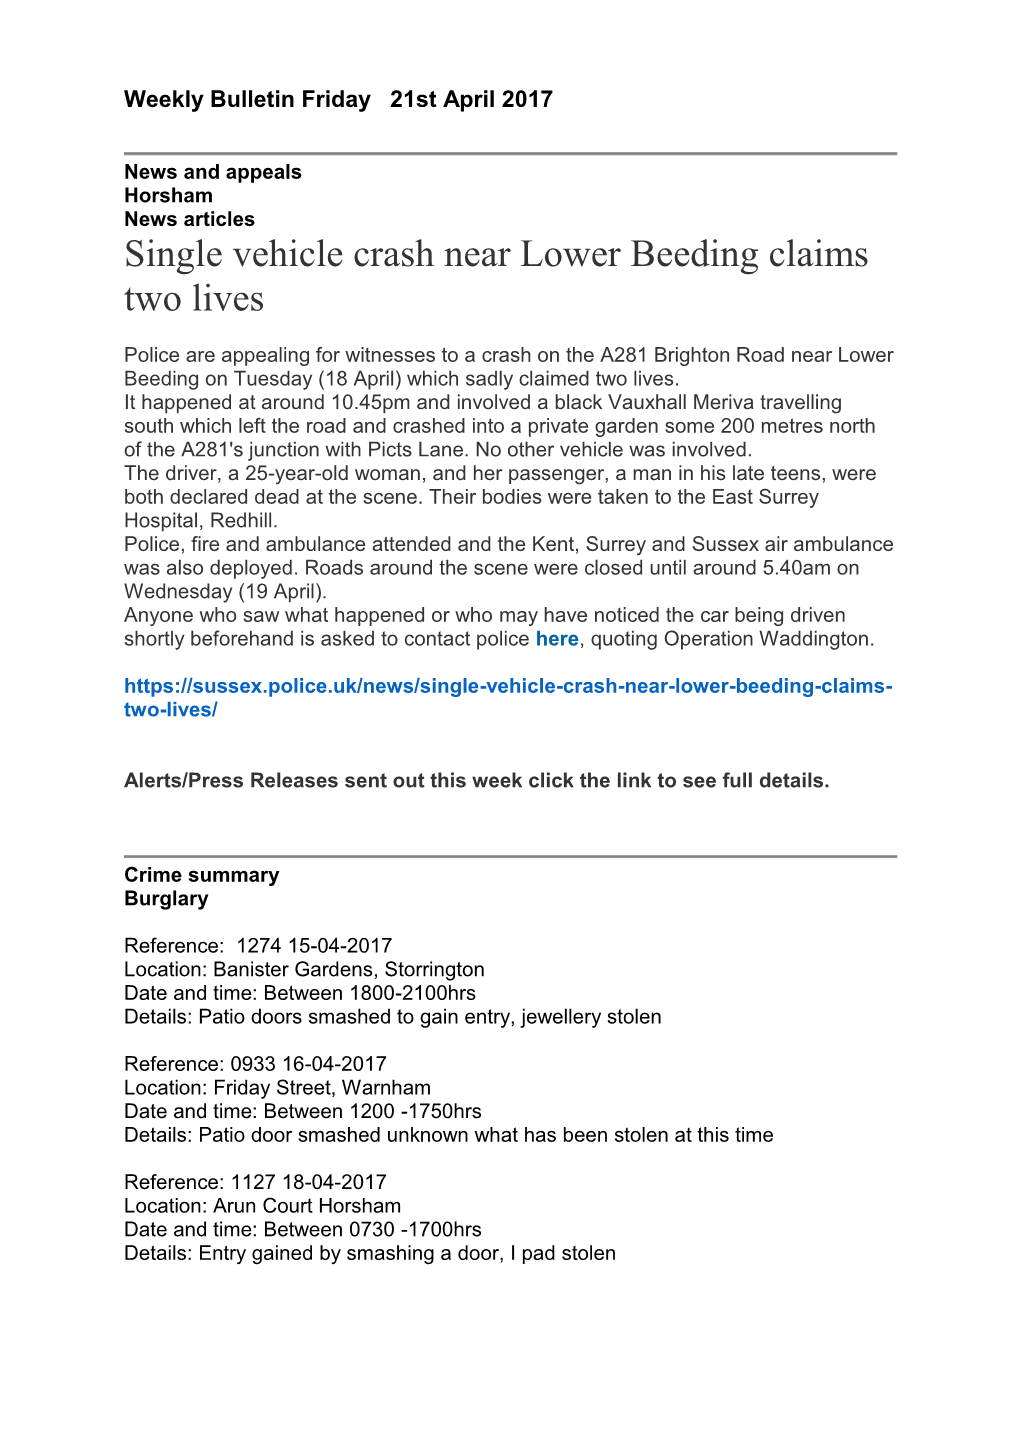 Single Vehicle Crash Near Lower Beeding Claims Two Lives